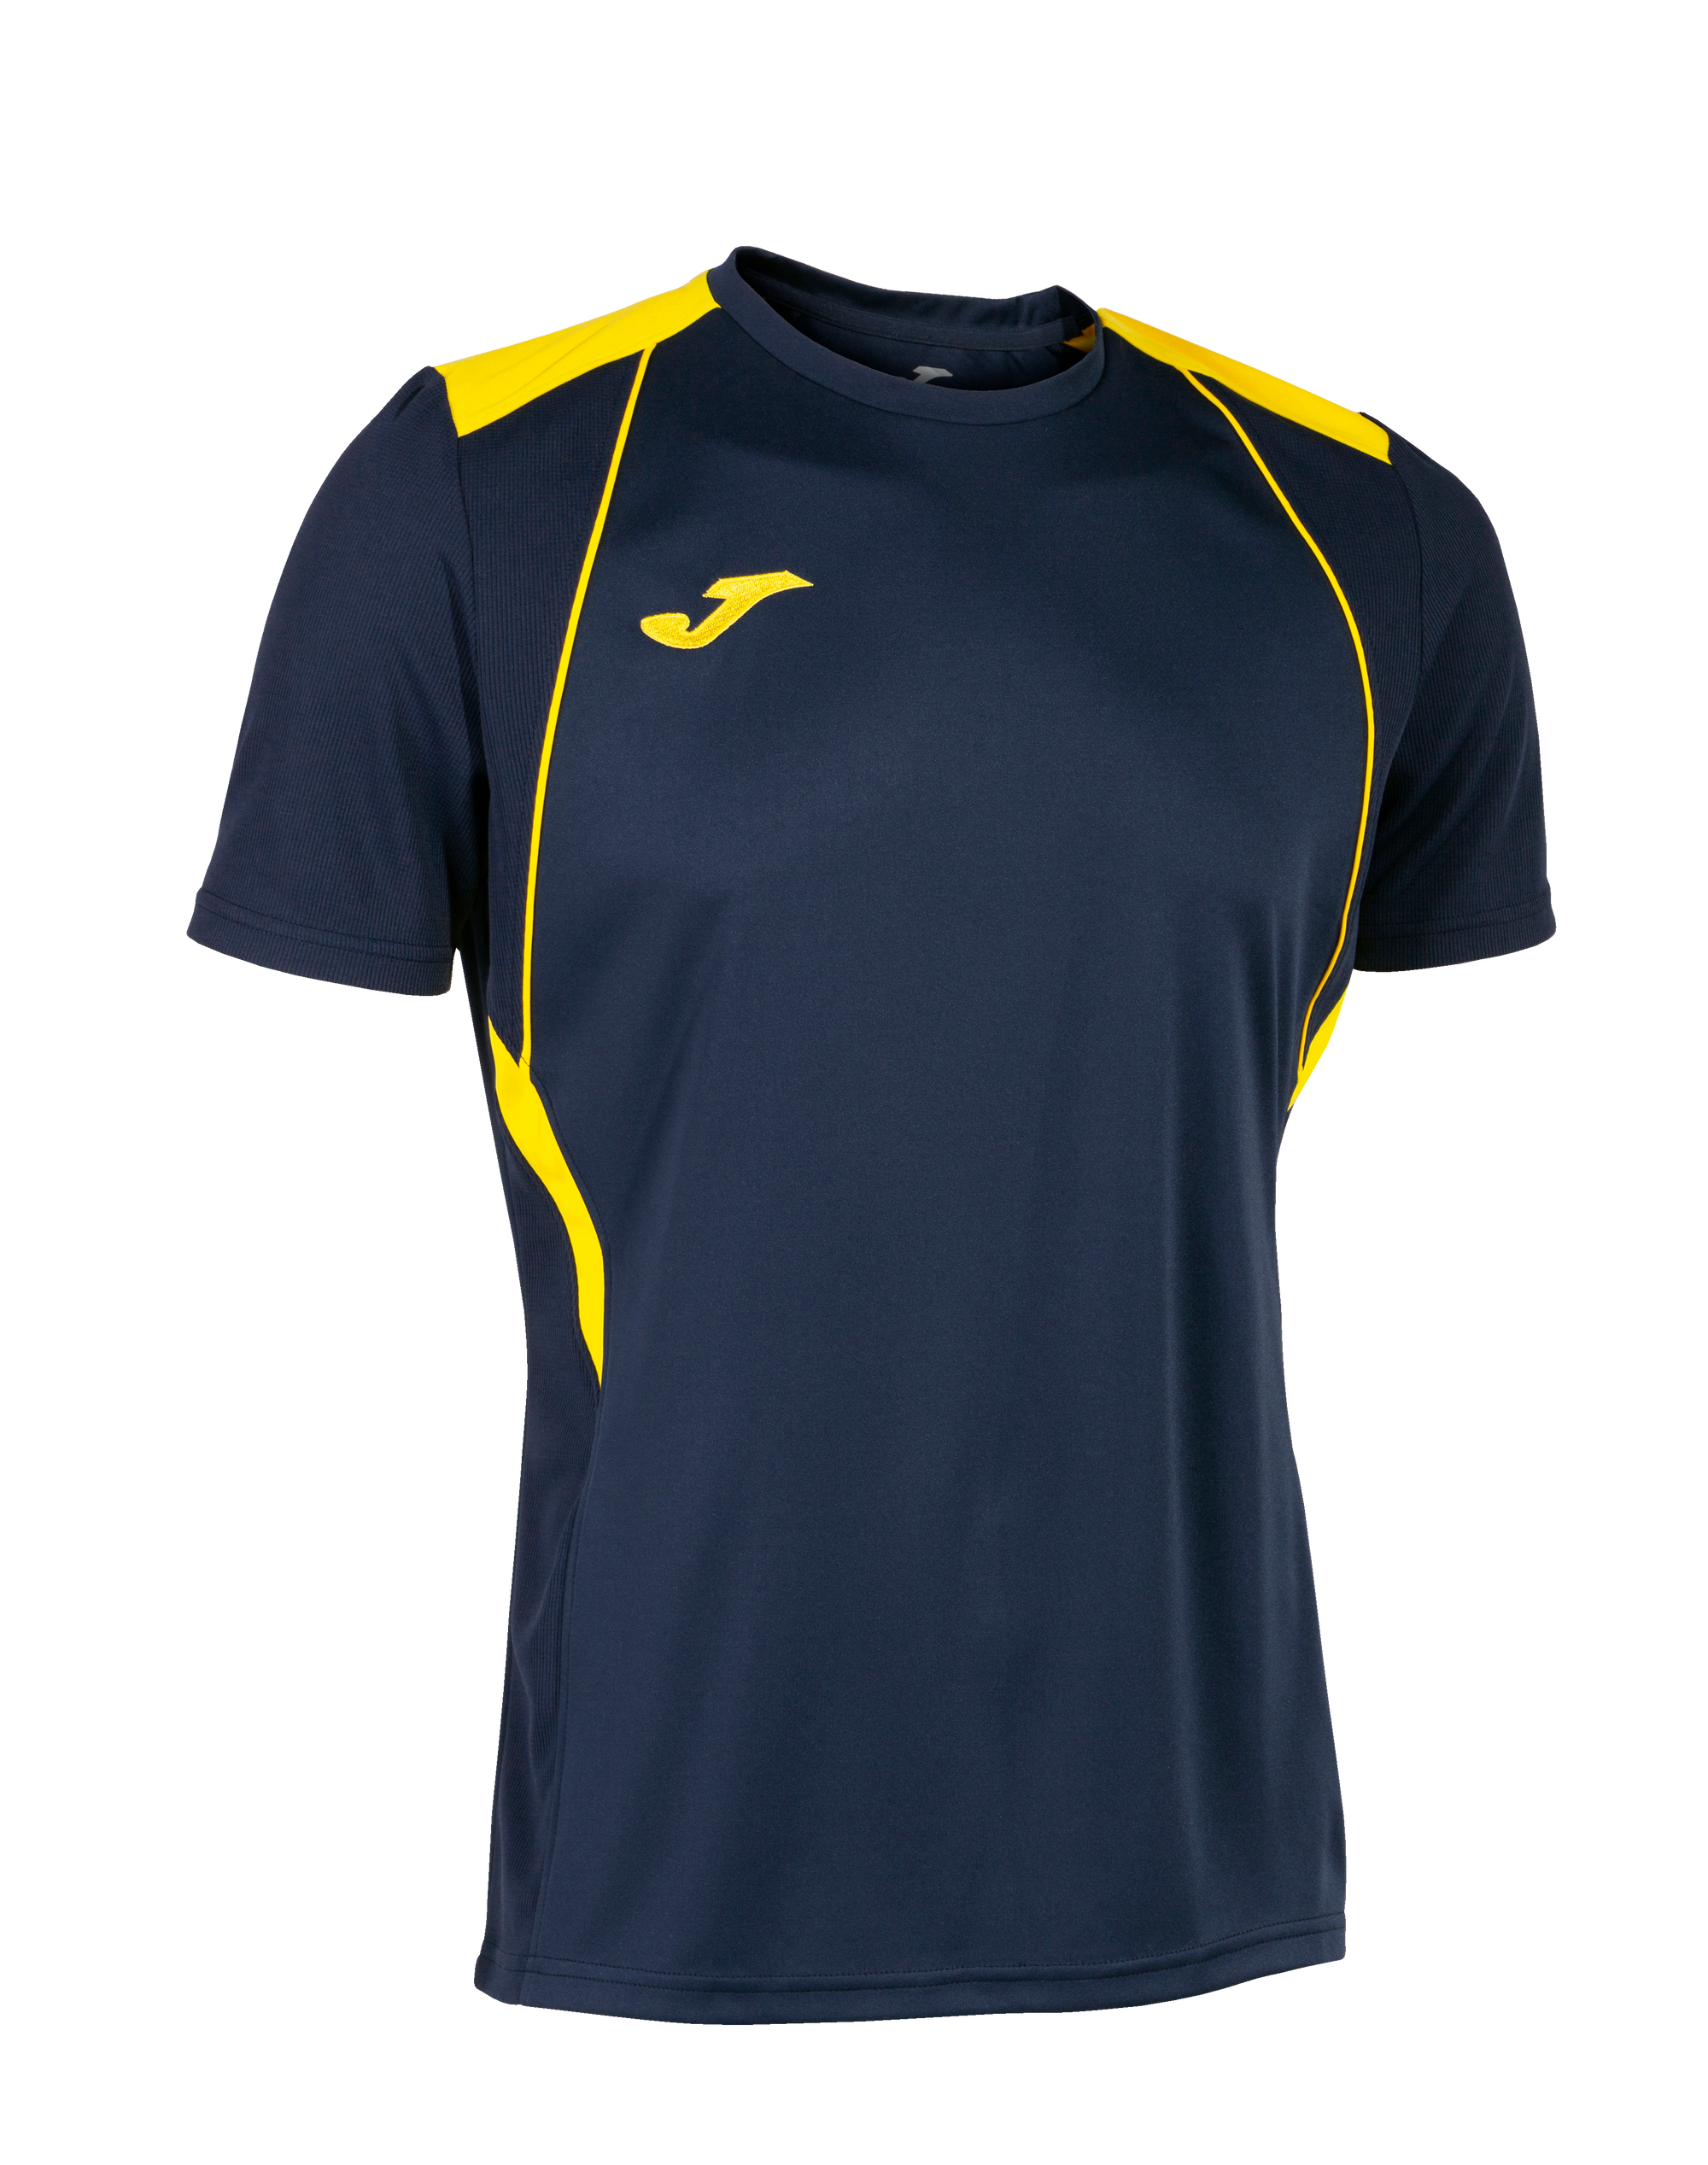 Joma Championship VII Short Sleeve T-Shirt - Dark Navy/Yellow